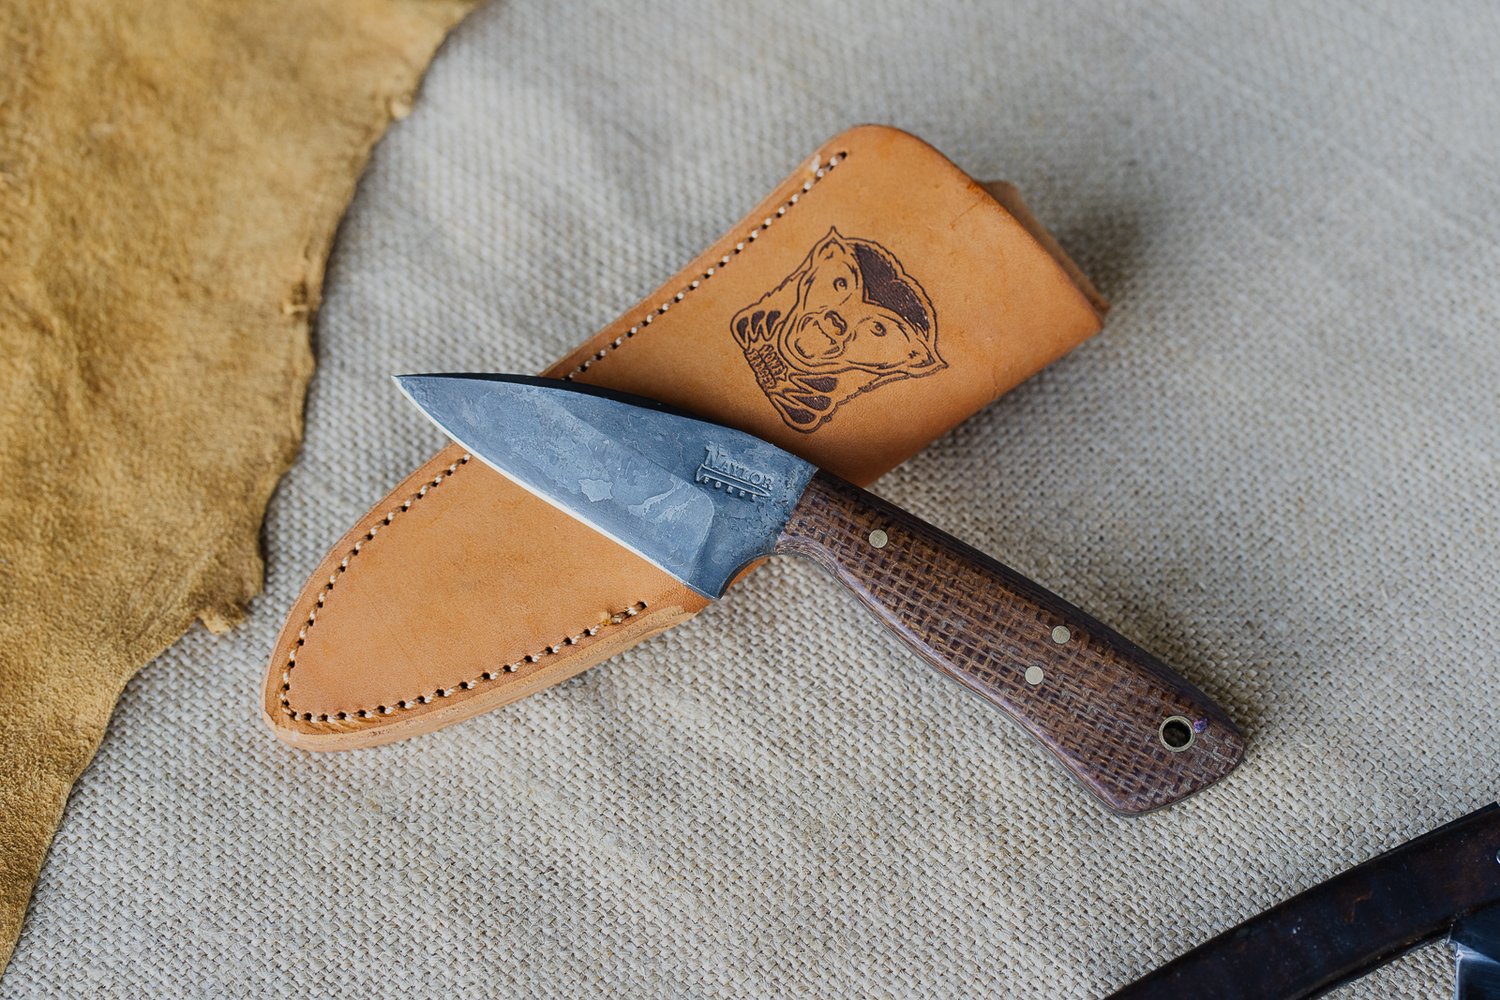 Preparing your strop leather - Honey Badger Knives